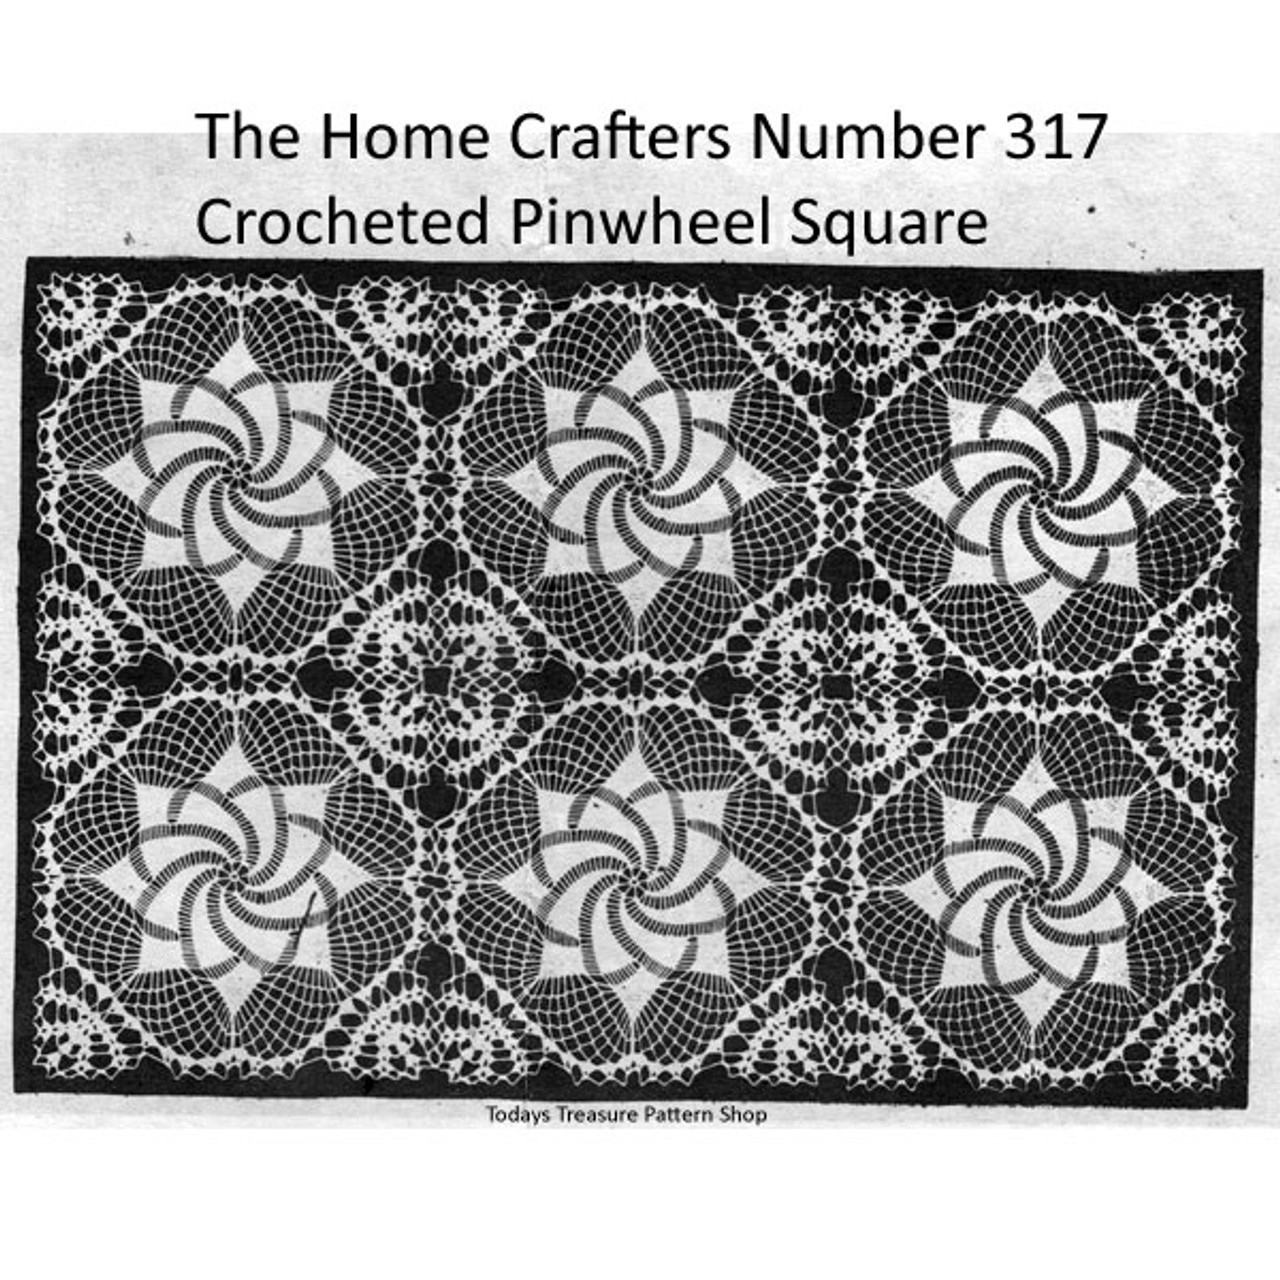 Homecrafters 317, Pinwheel Crochet Square pattern